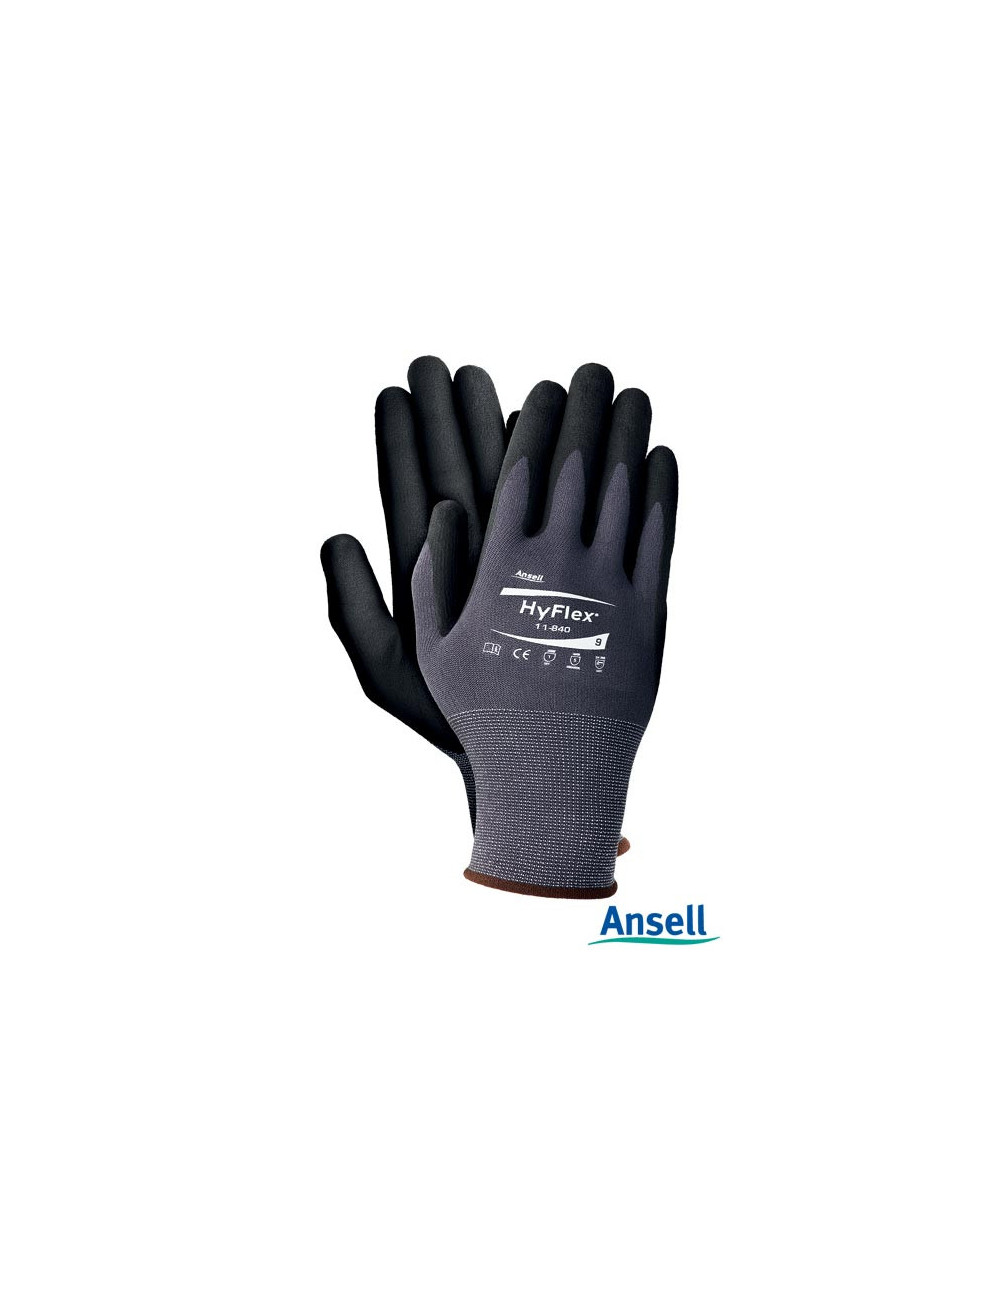 Protective gloves rahyflex11-840 sb gray-black Ansell